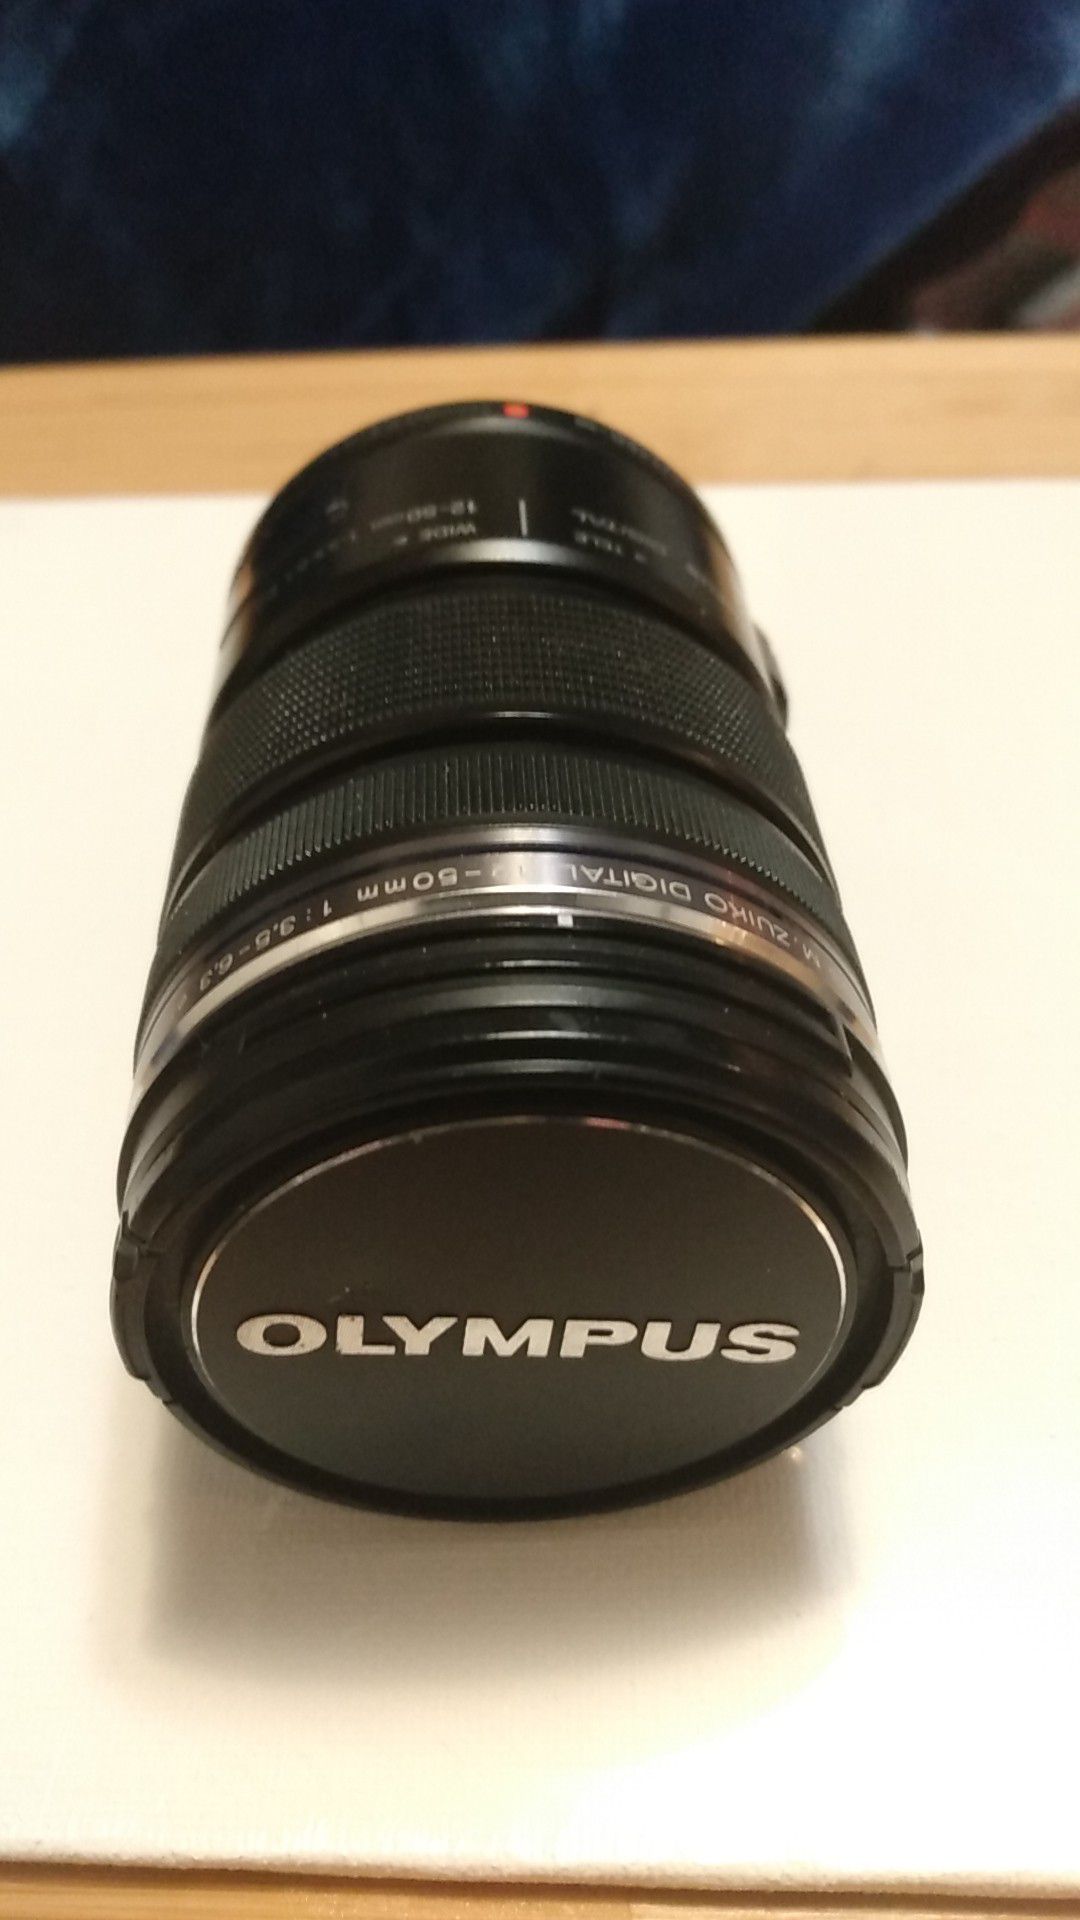 Olympus m.Zuiko Digital 12-50mm lens